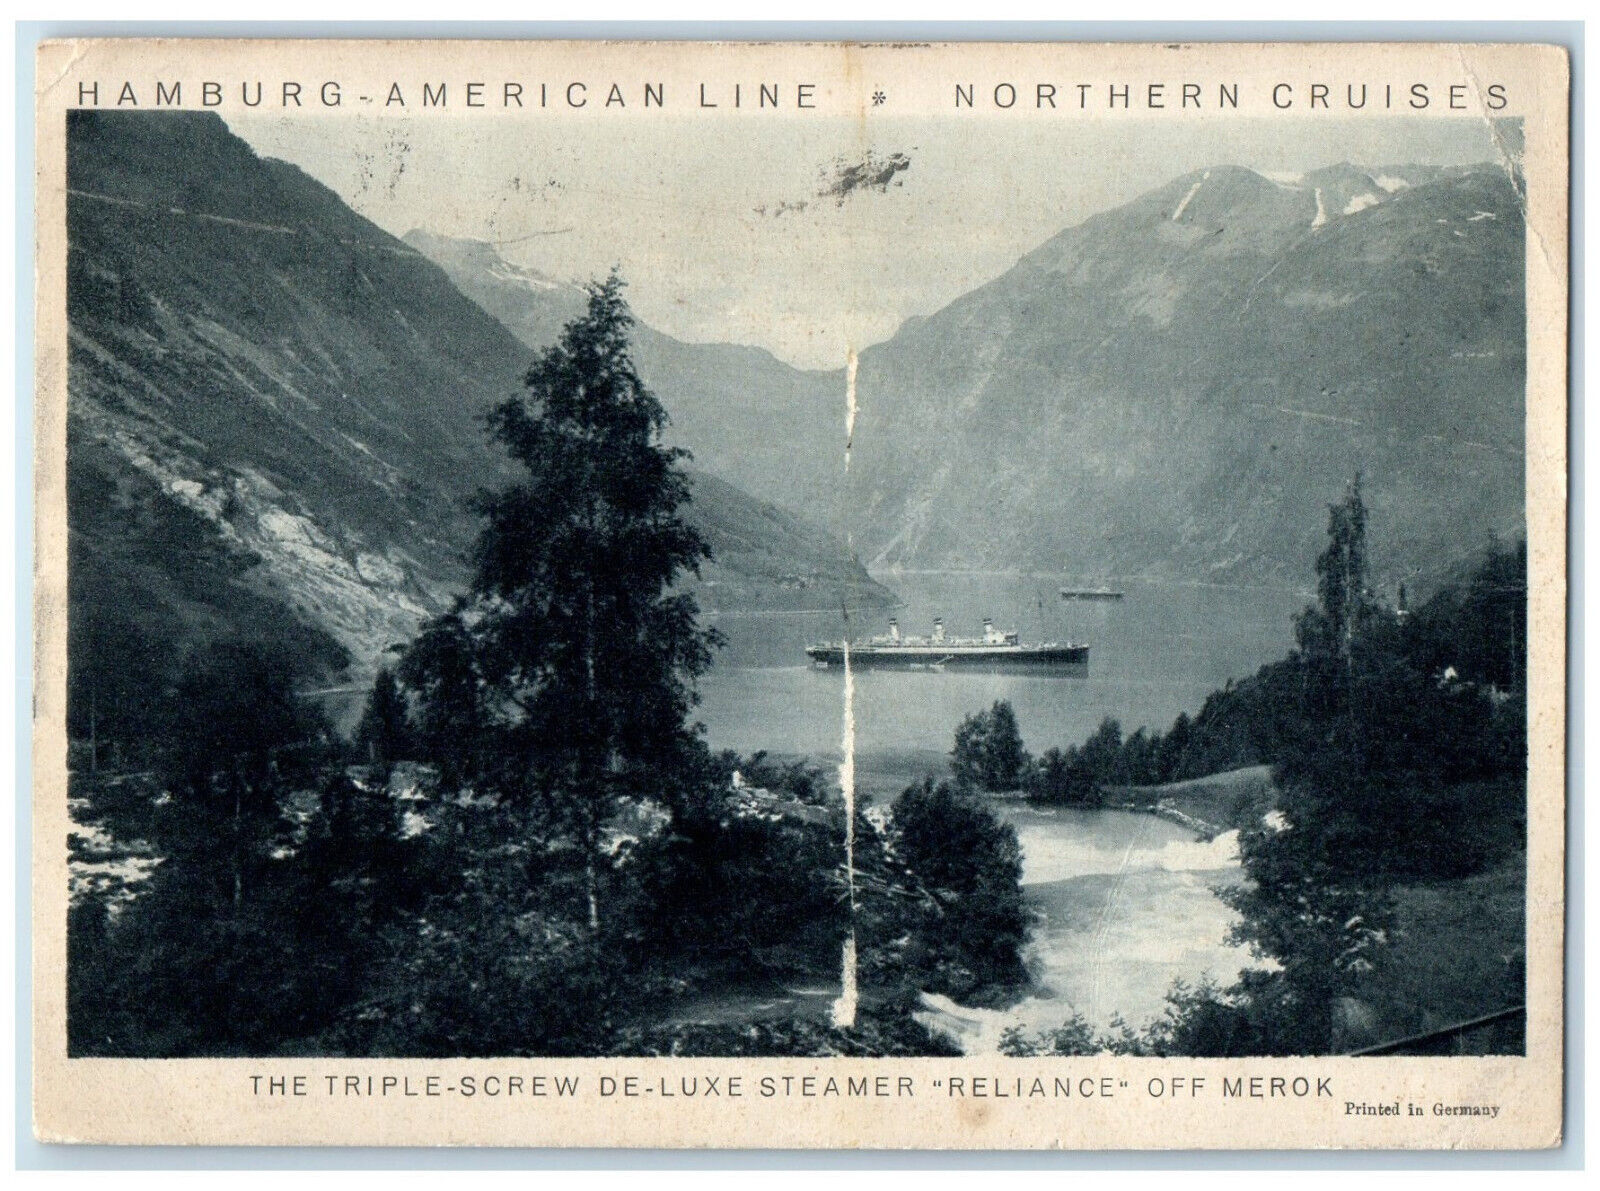 1930 Reliance Steamer Cruise Hamburg American Line Merok De-Luxe Screw Postcard